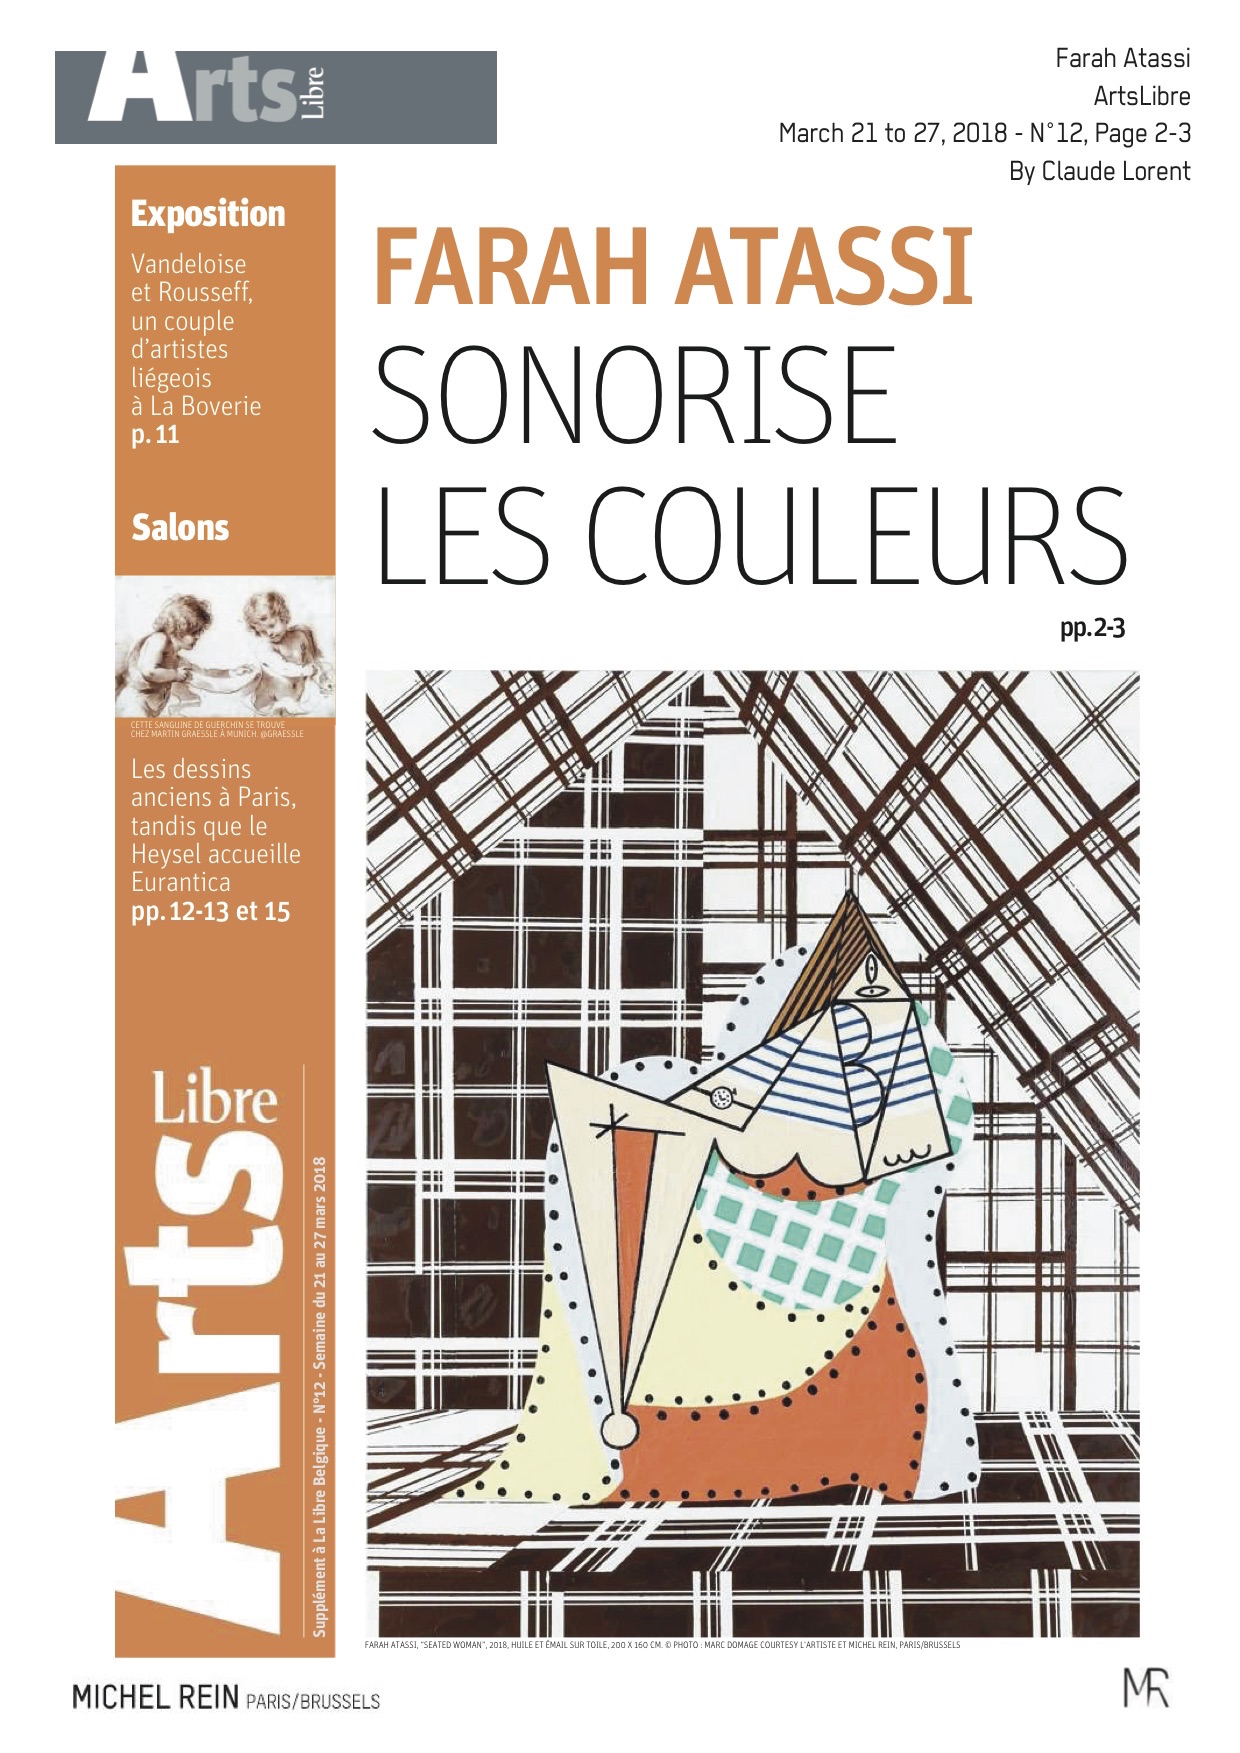 FARAH ATASSI SONORISE LES COULEURS - Arts Libre